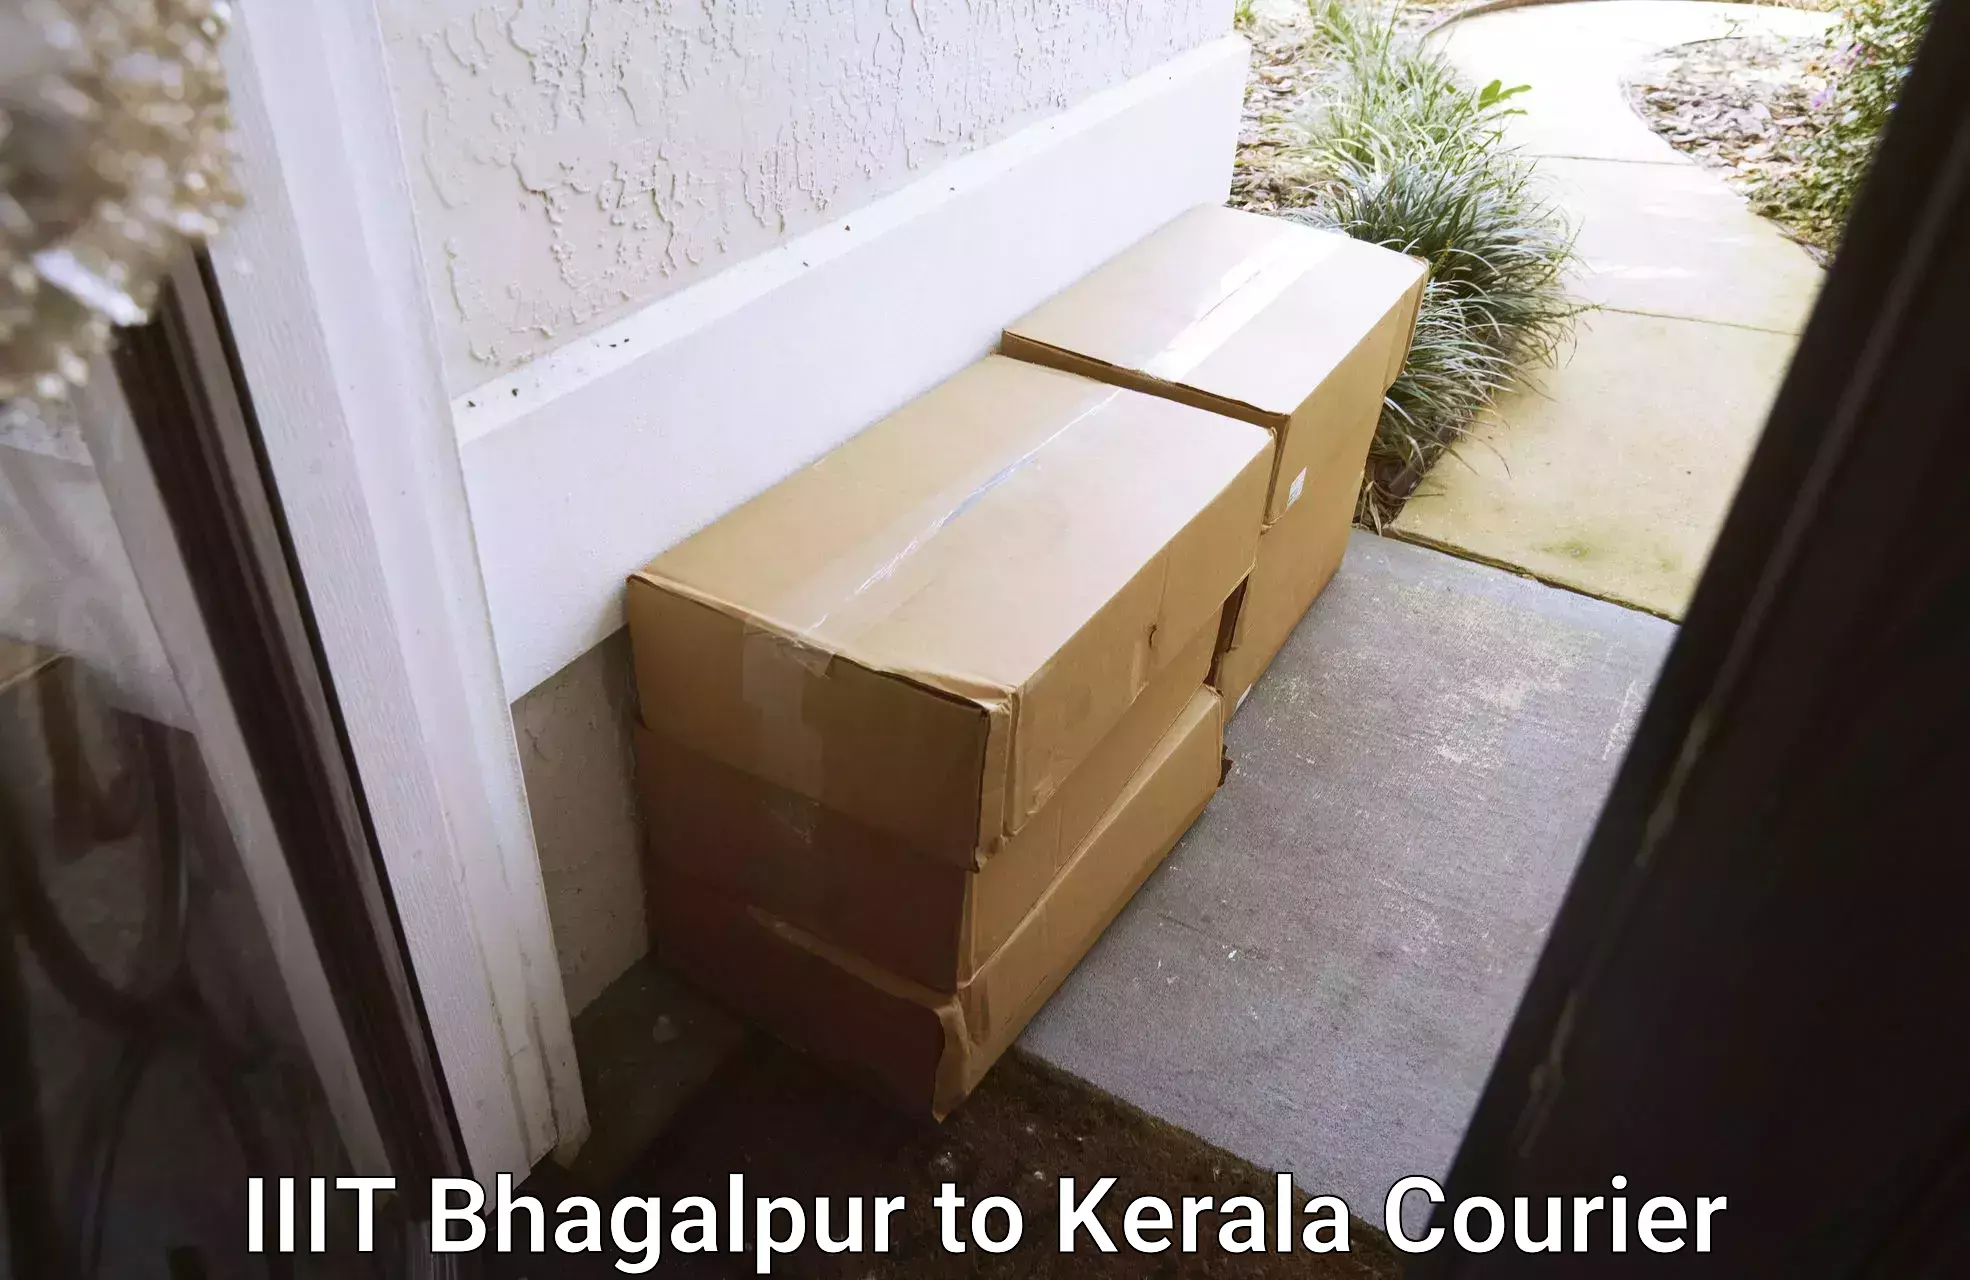 Efficient moving company IIIT Bhagalpur to Kerala